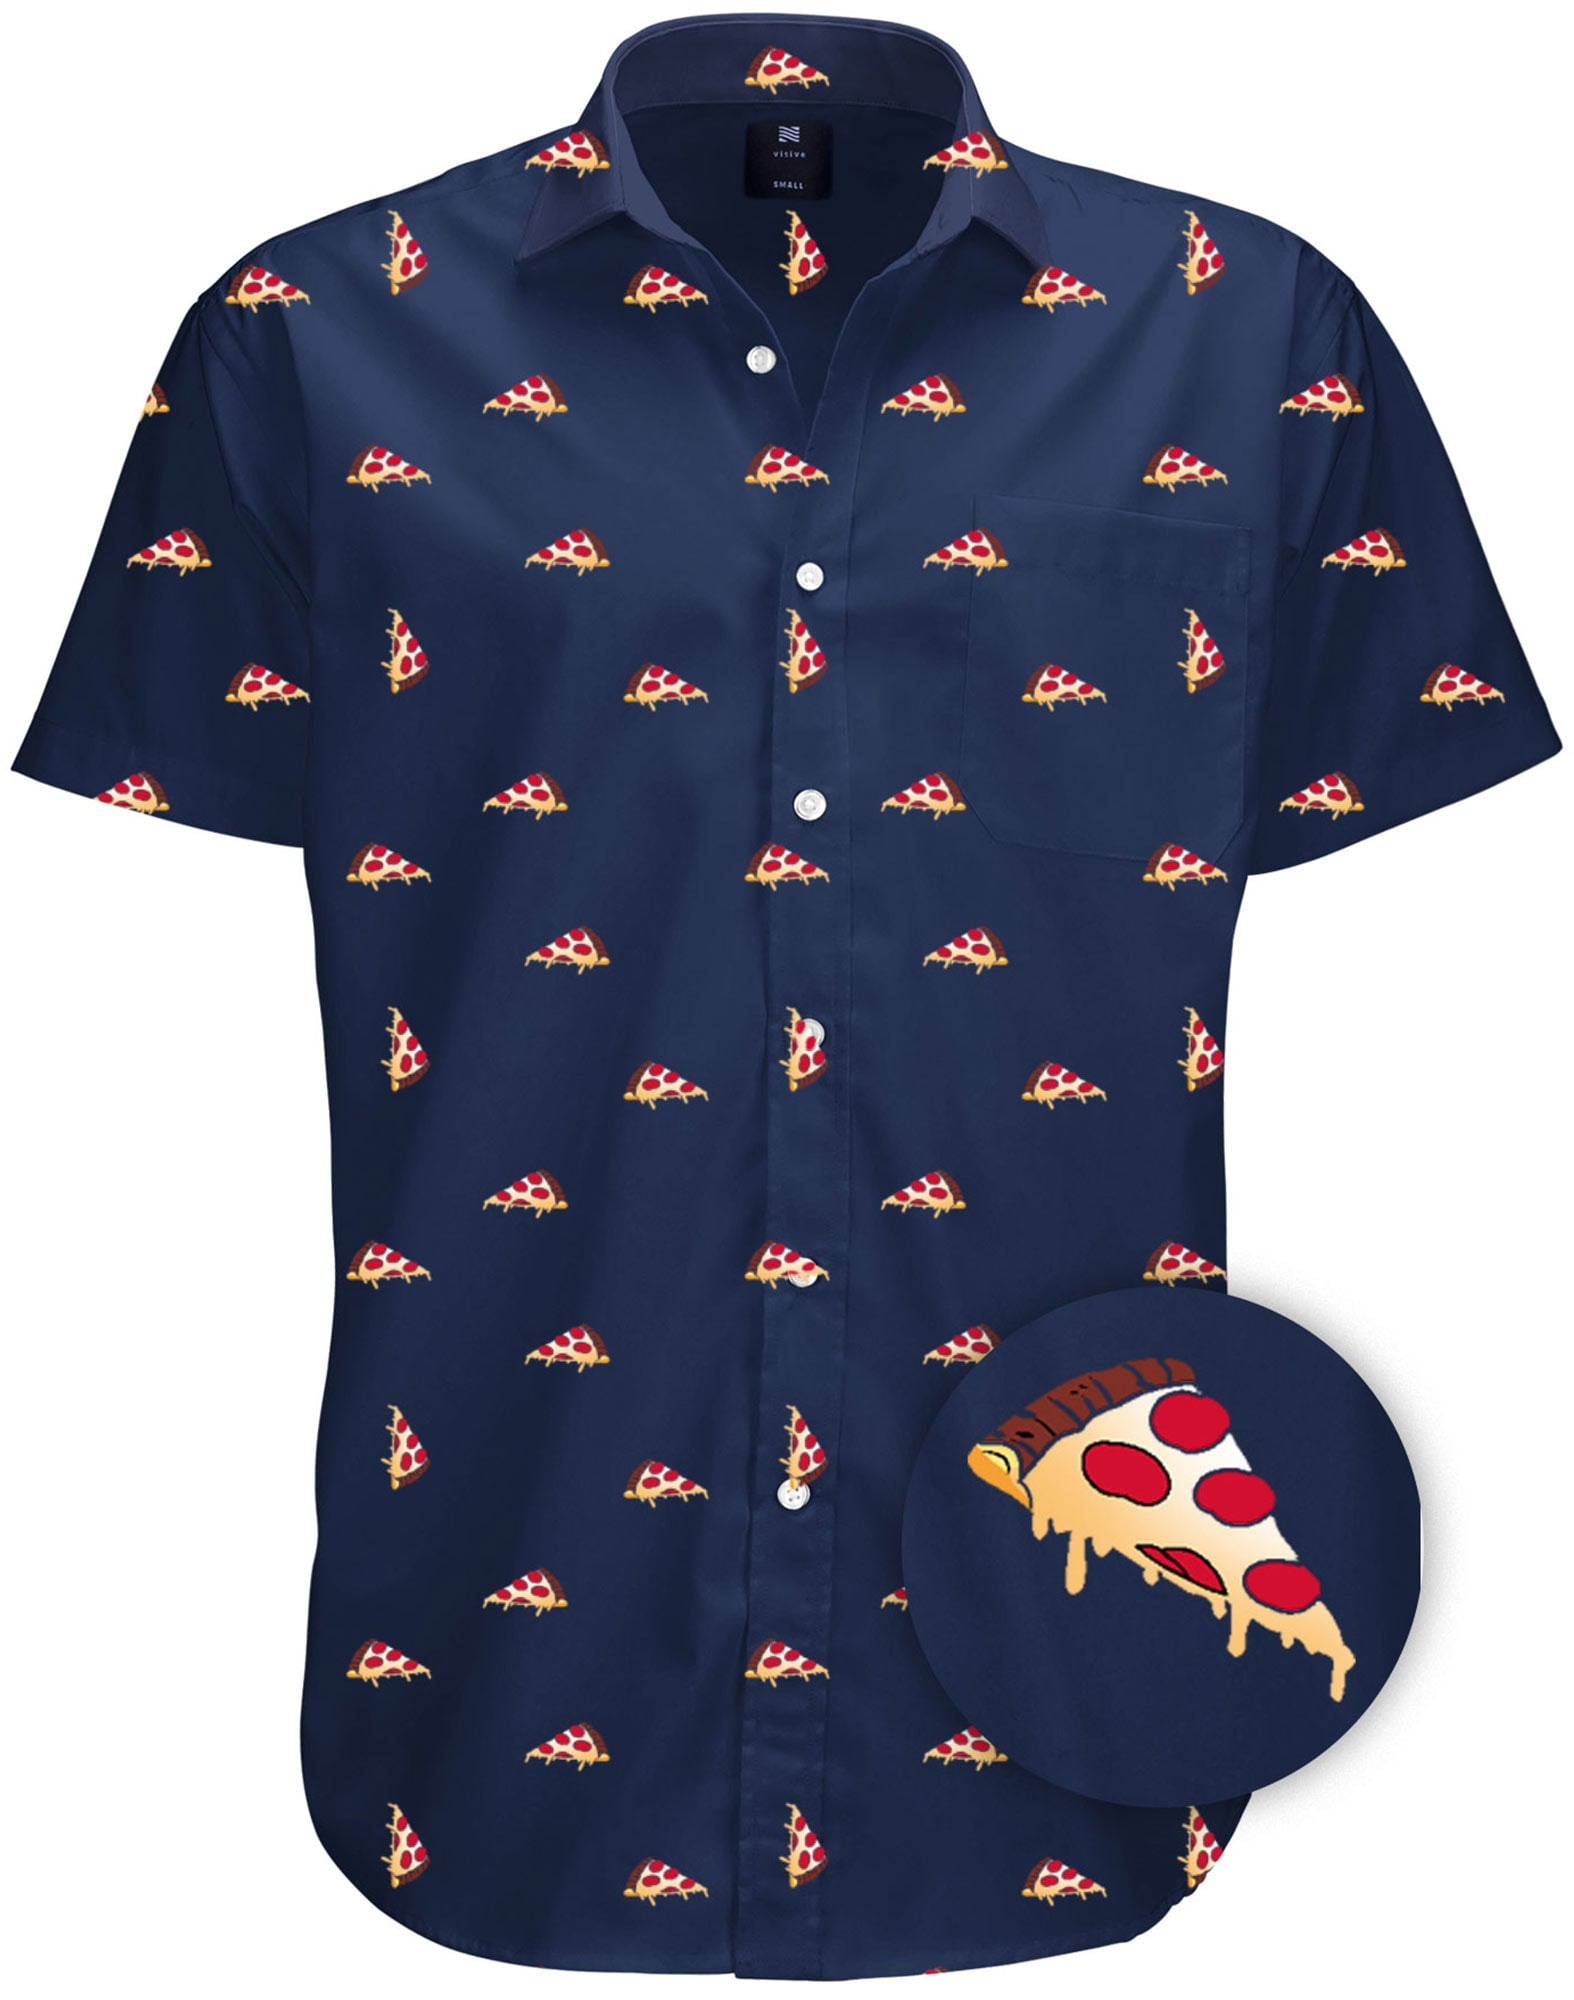 Mens Big Tall Short Sleeve Button Shirt, Printed Pizza Shirts -